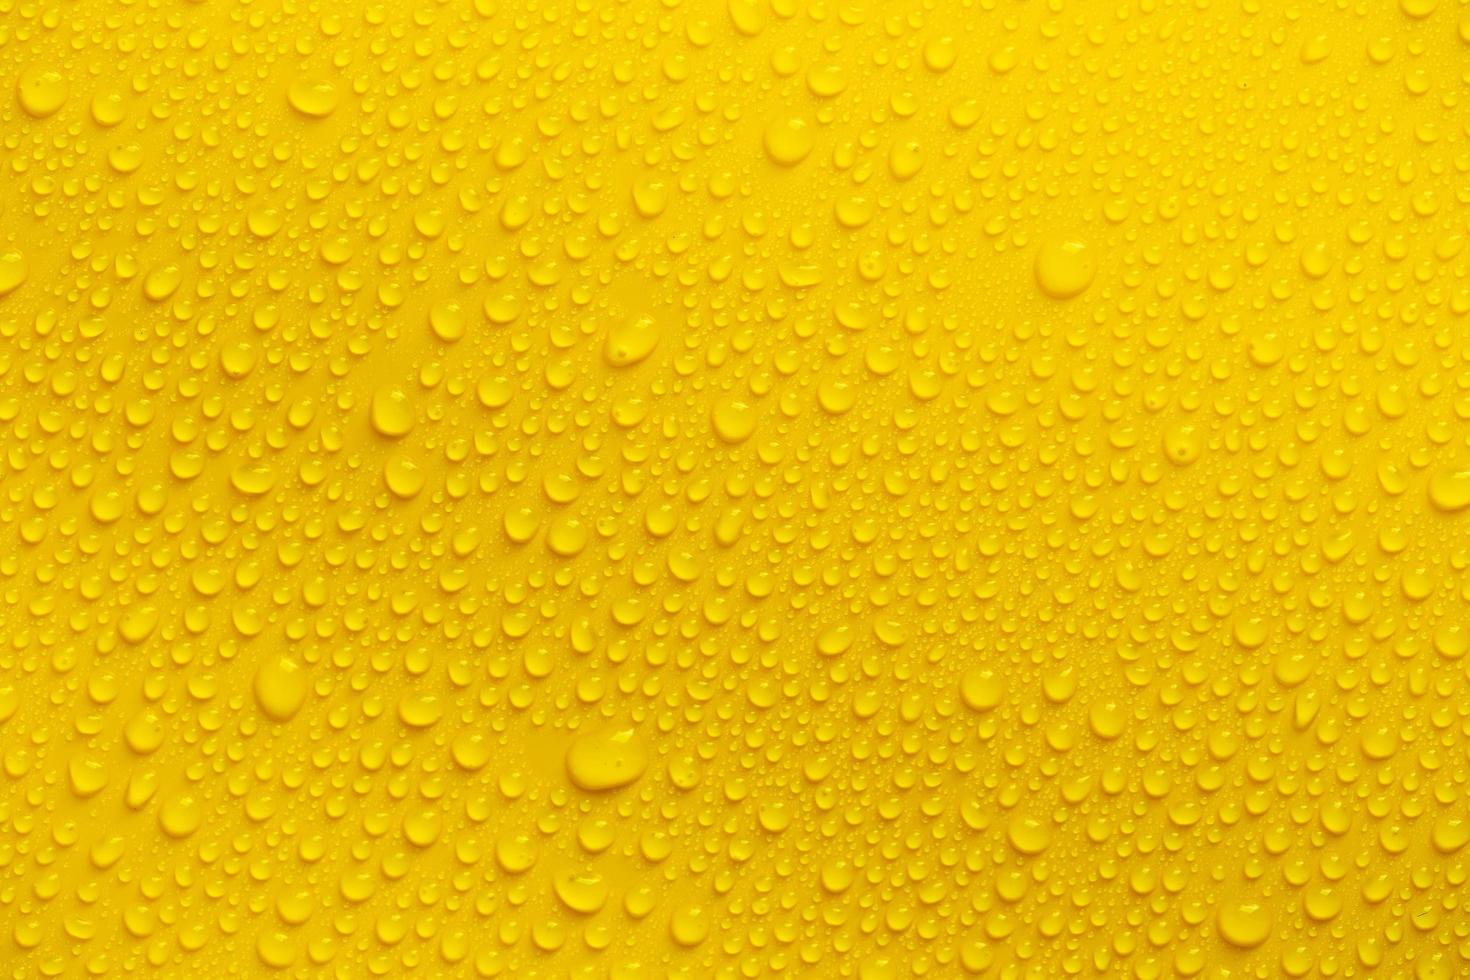 regn eller vattendroppar på gul bakgrund foto